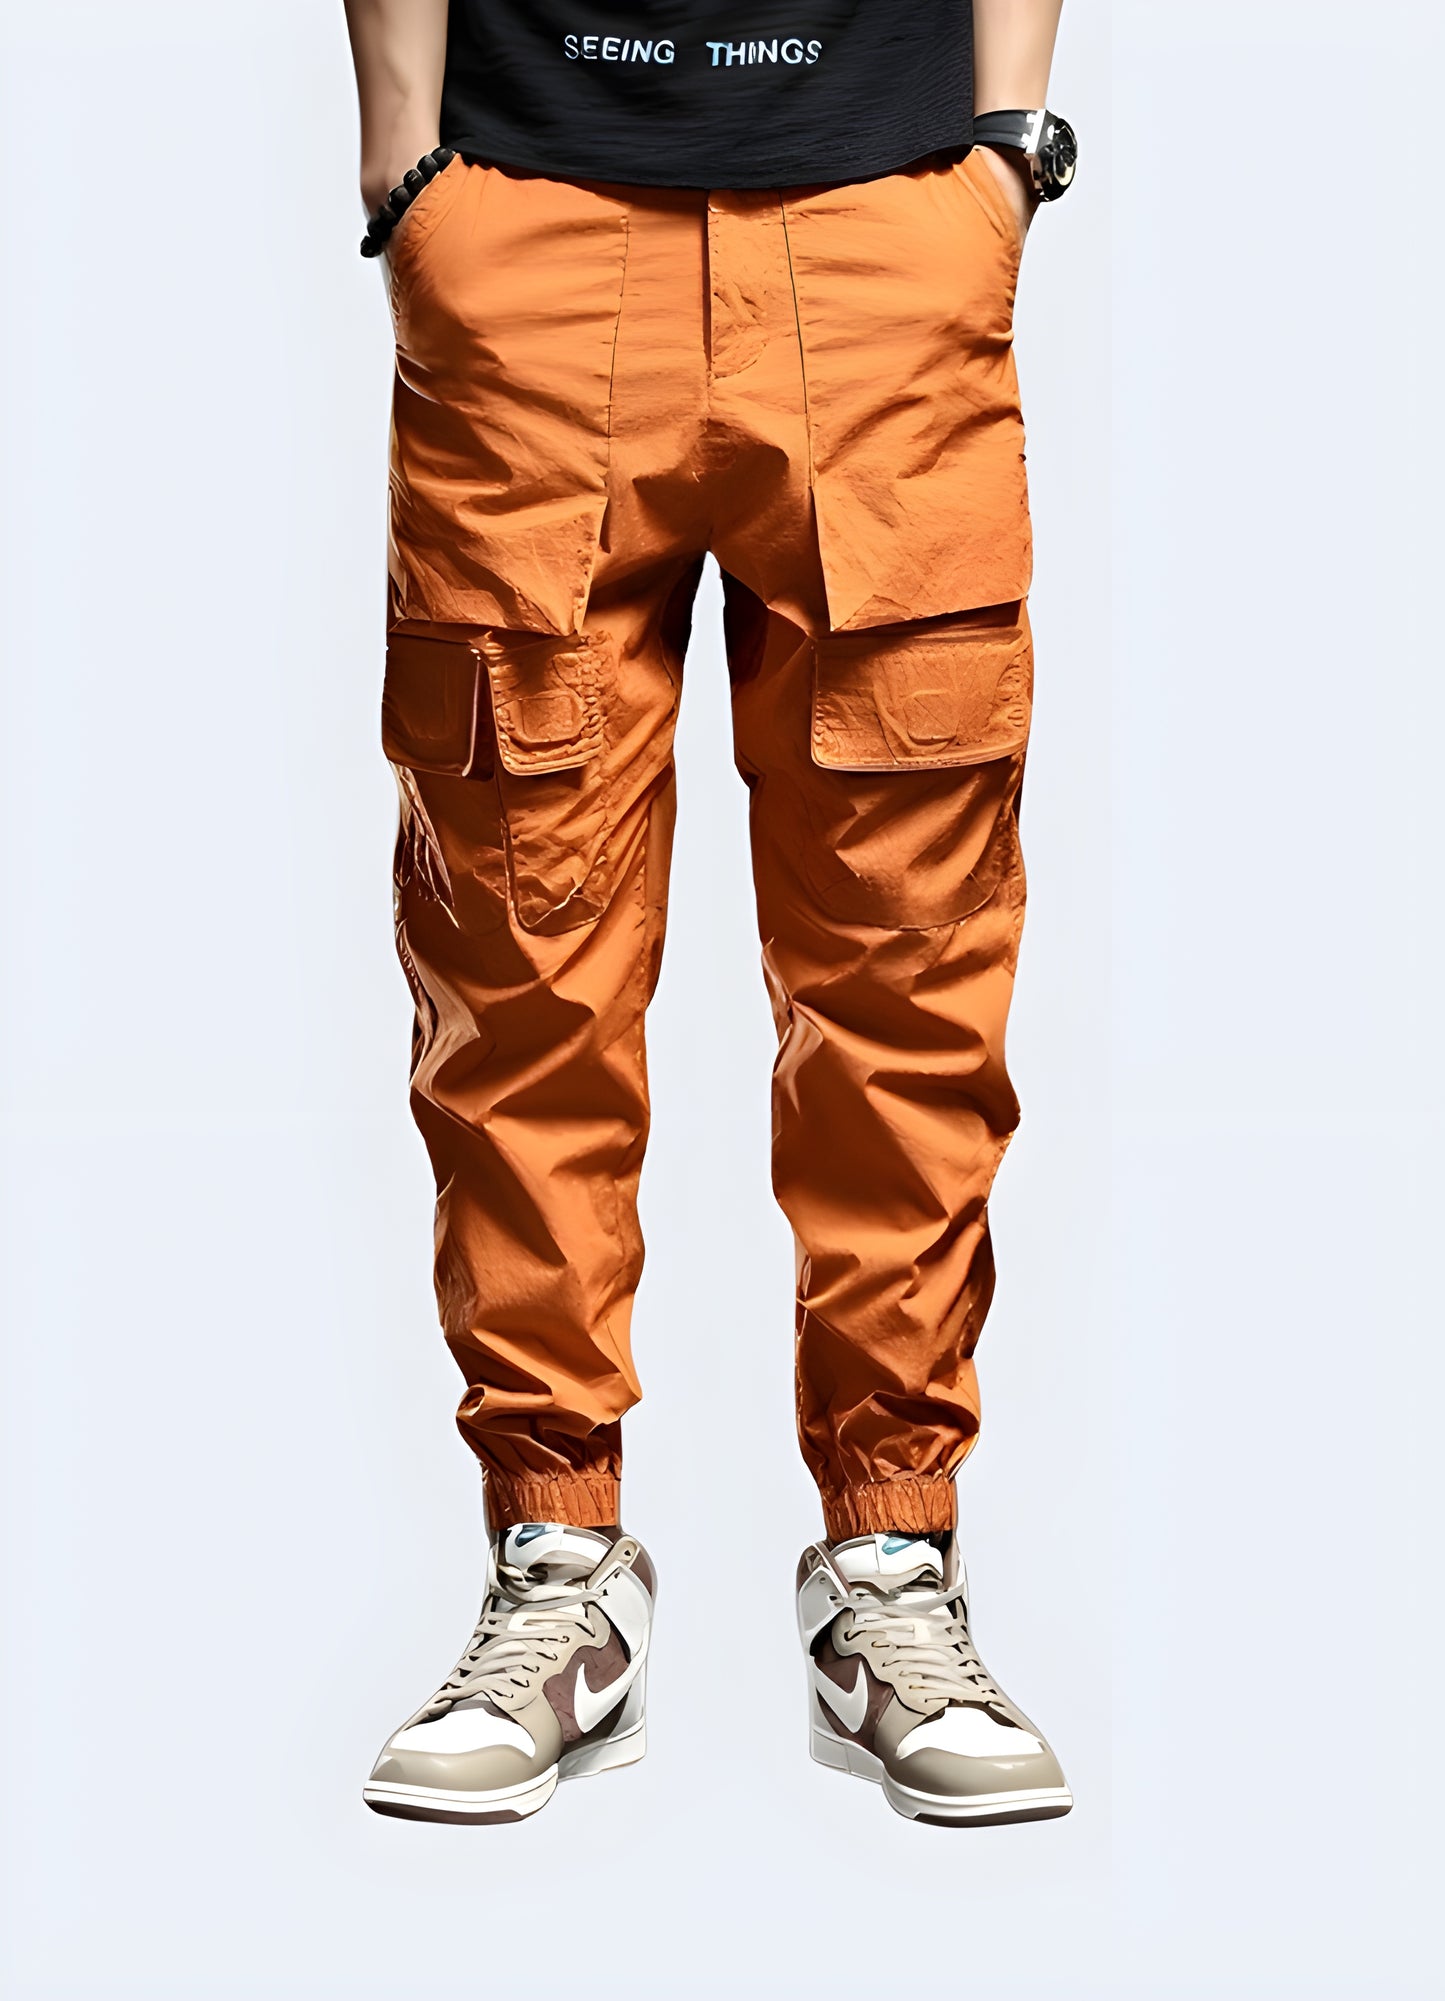 Futuristic orange techwear pants men wearing front view.